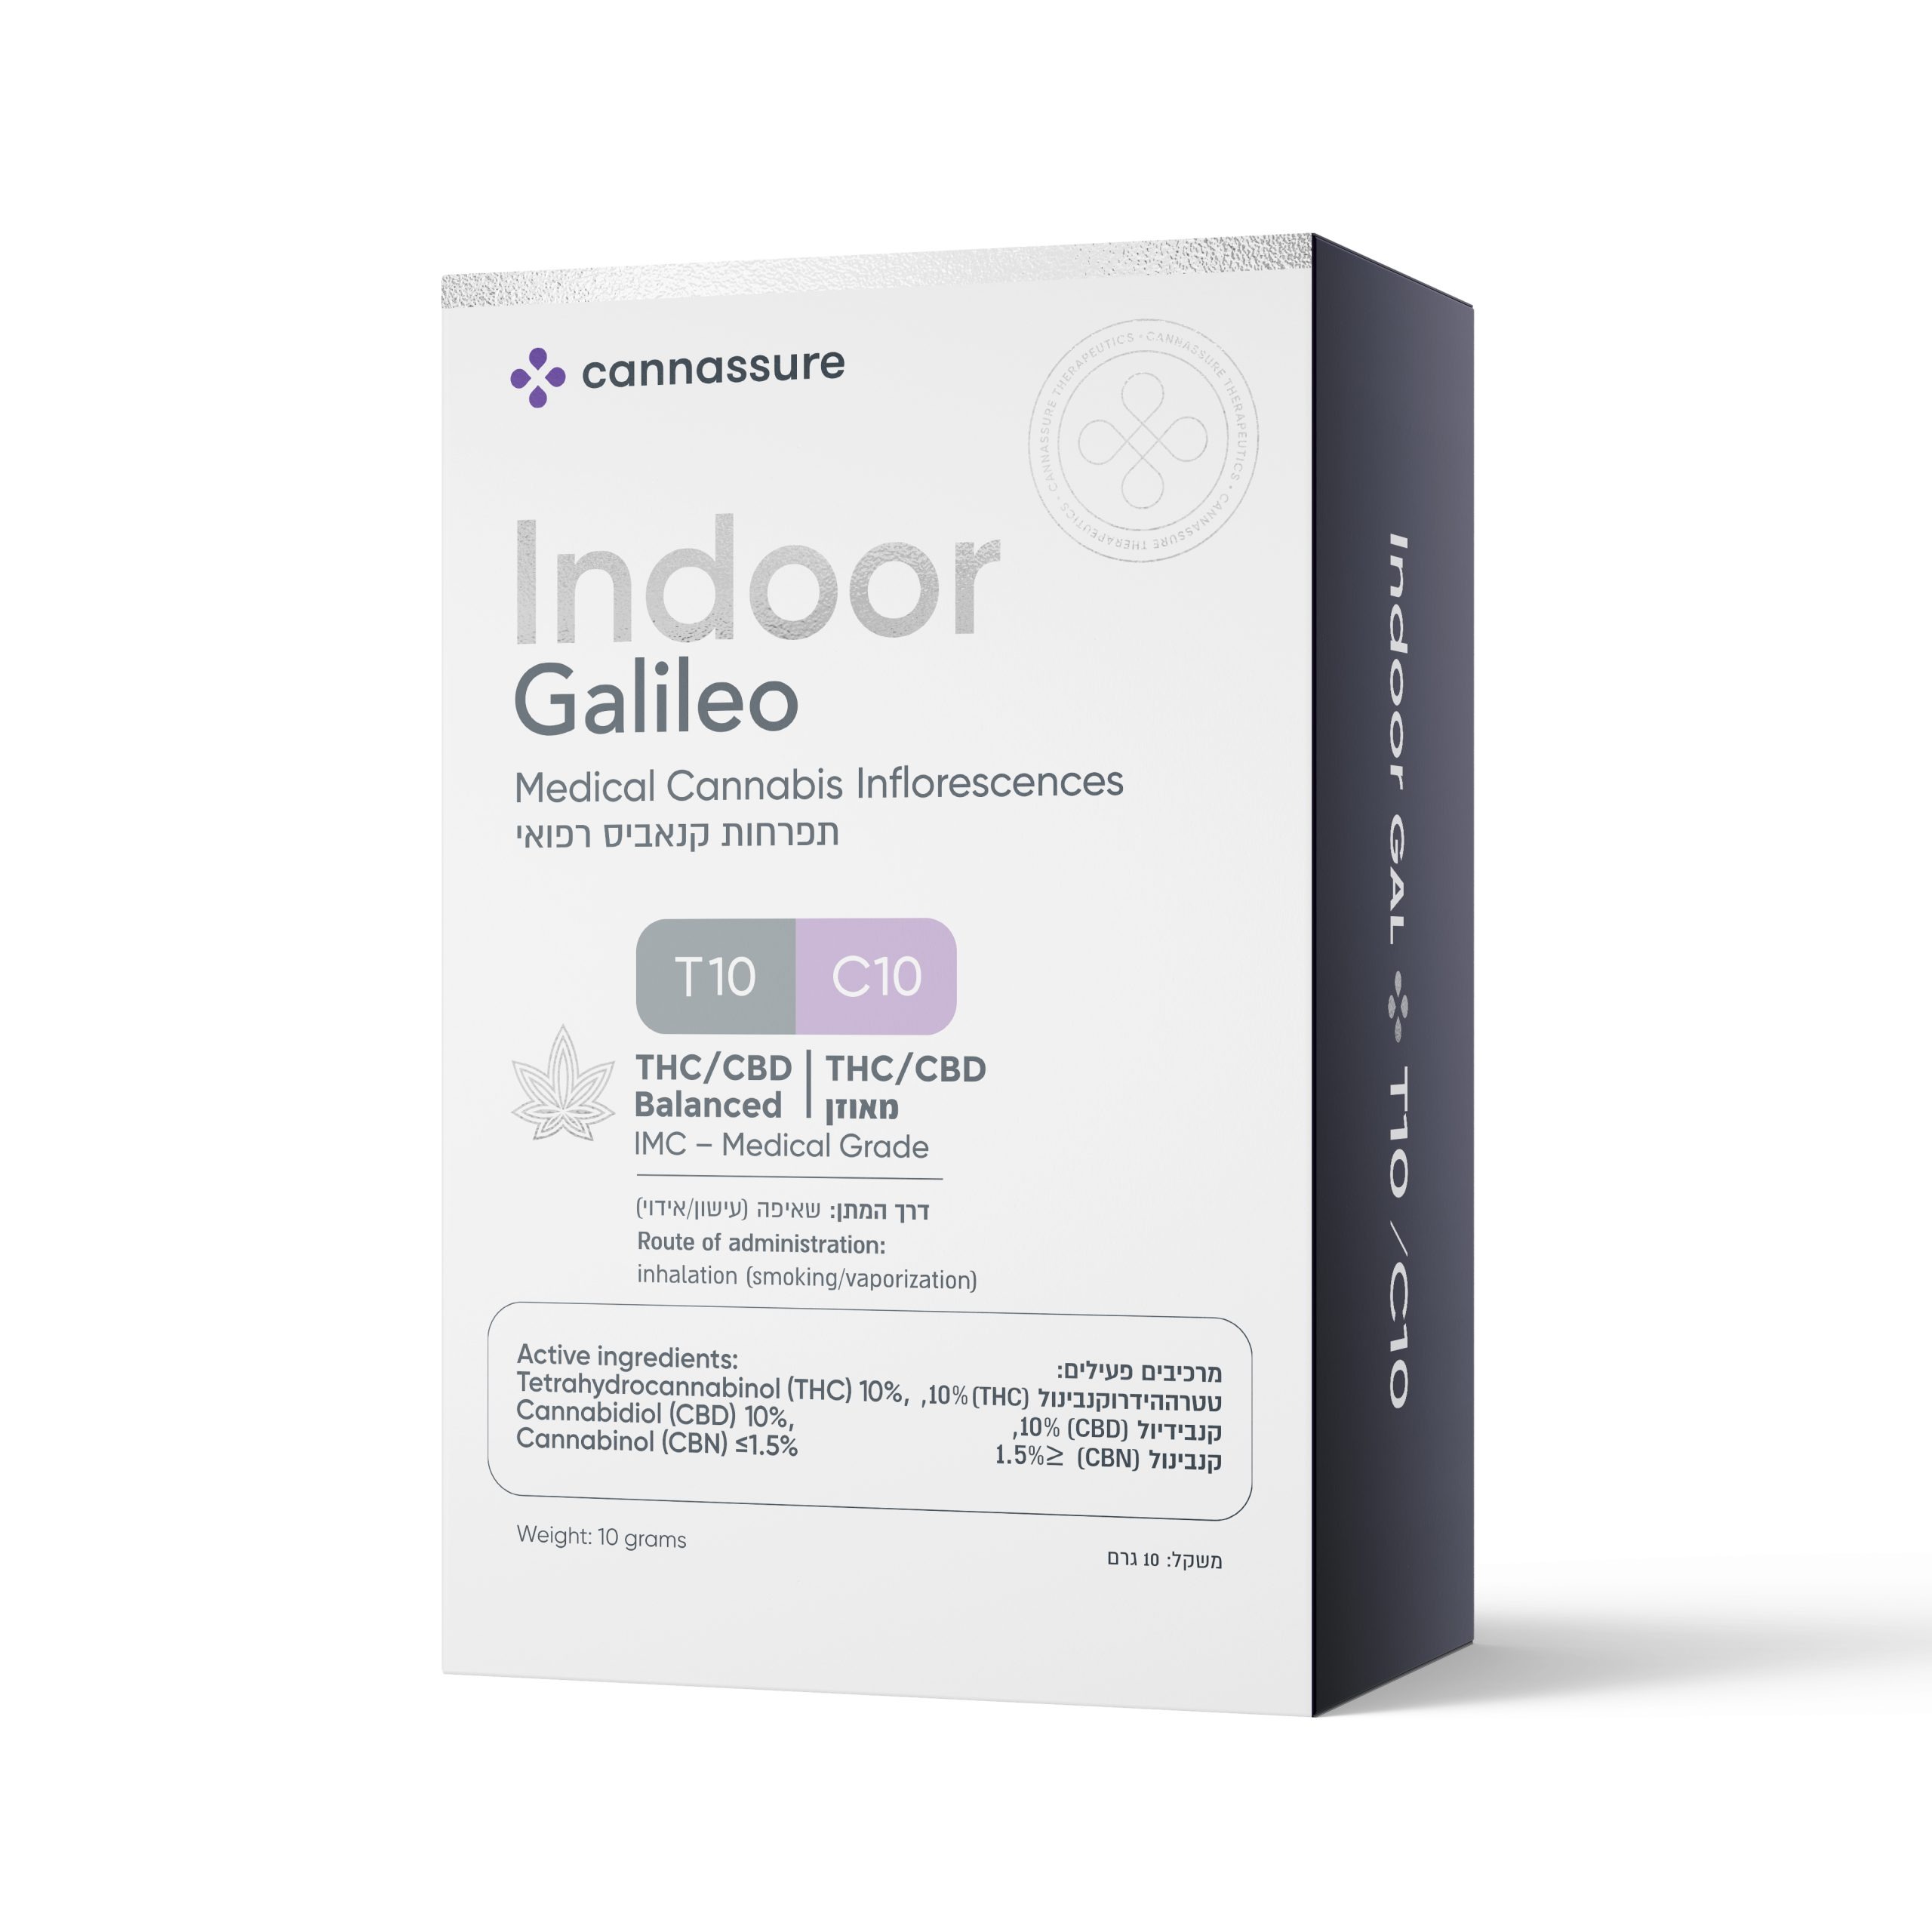 Indoor Galileo inflorescences T10/C10